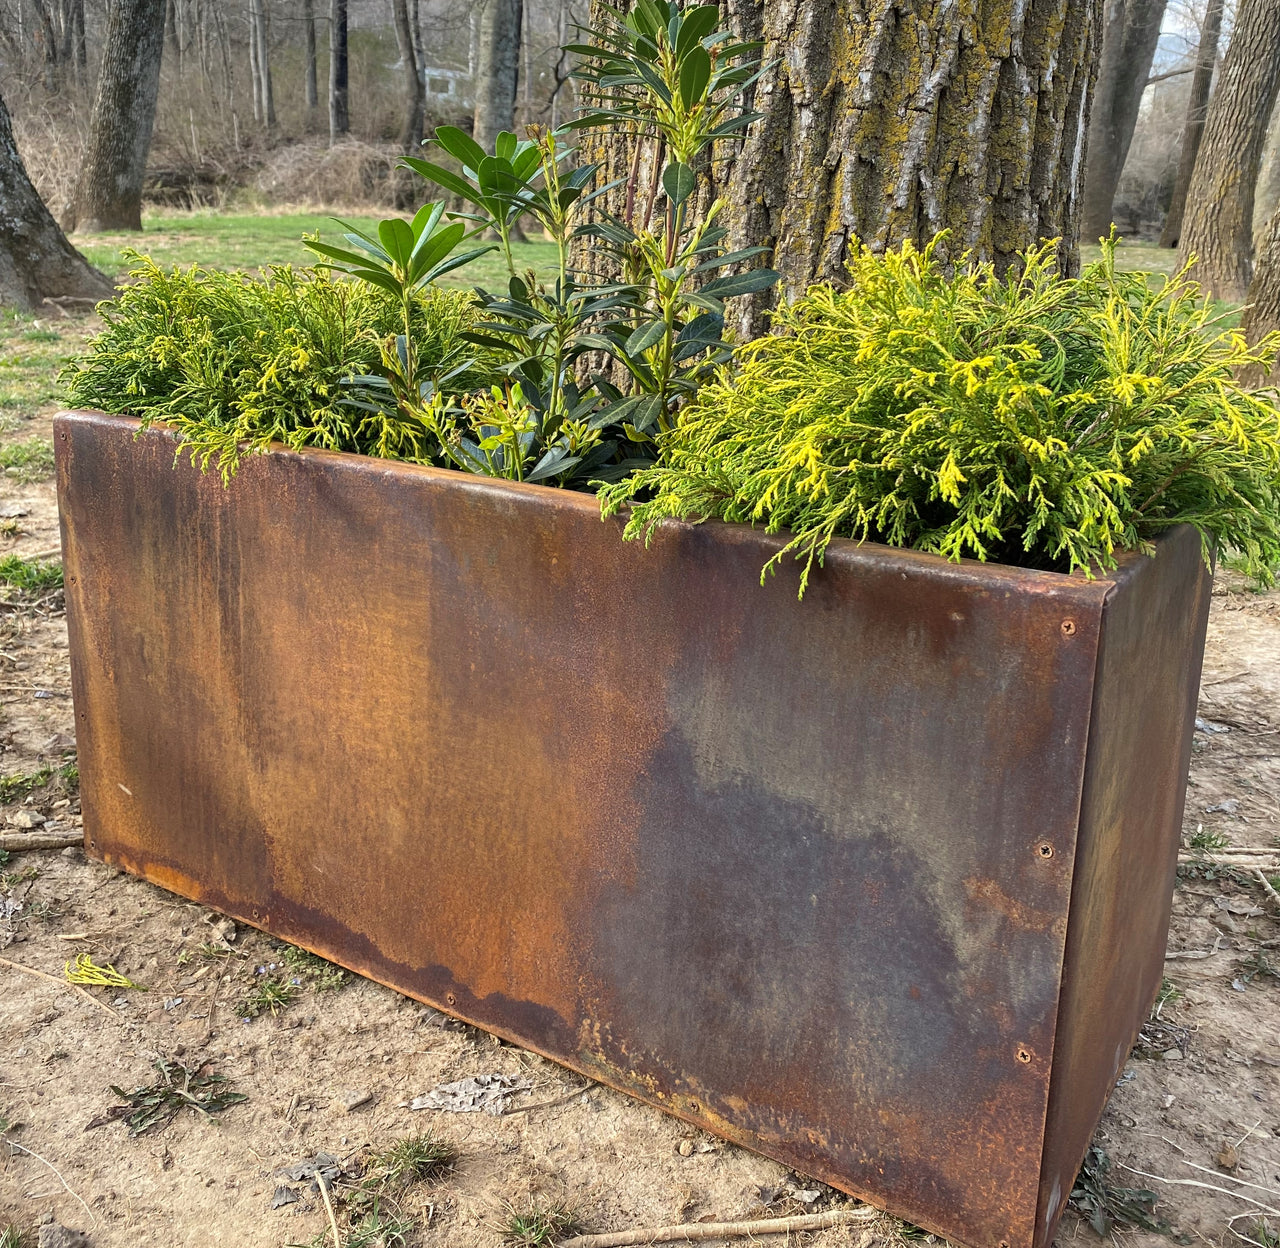 Metal Trough Planter - 30" x 12" x 14" Medium Rectangular Planter - Spring Annual Planter Pot - Raw Steel Will Develop Natural Rusty Patina